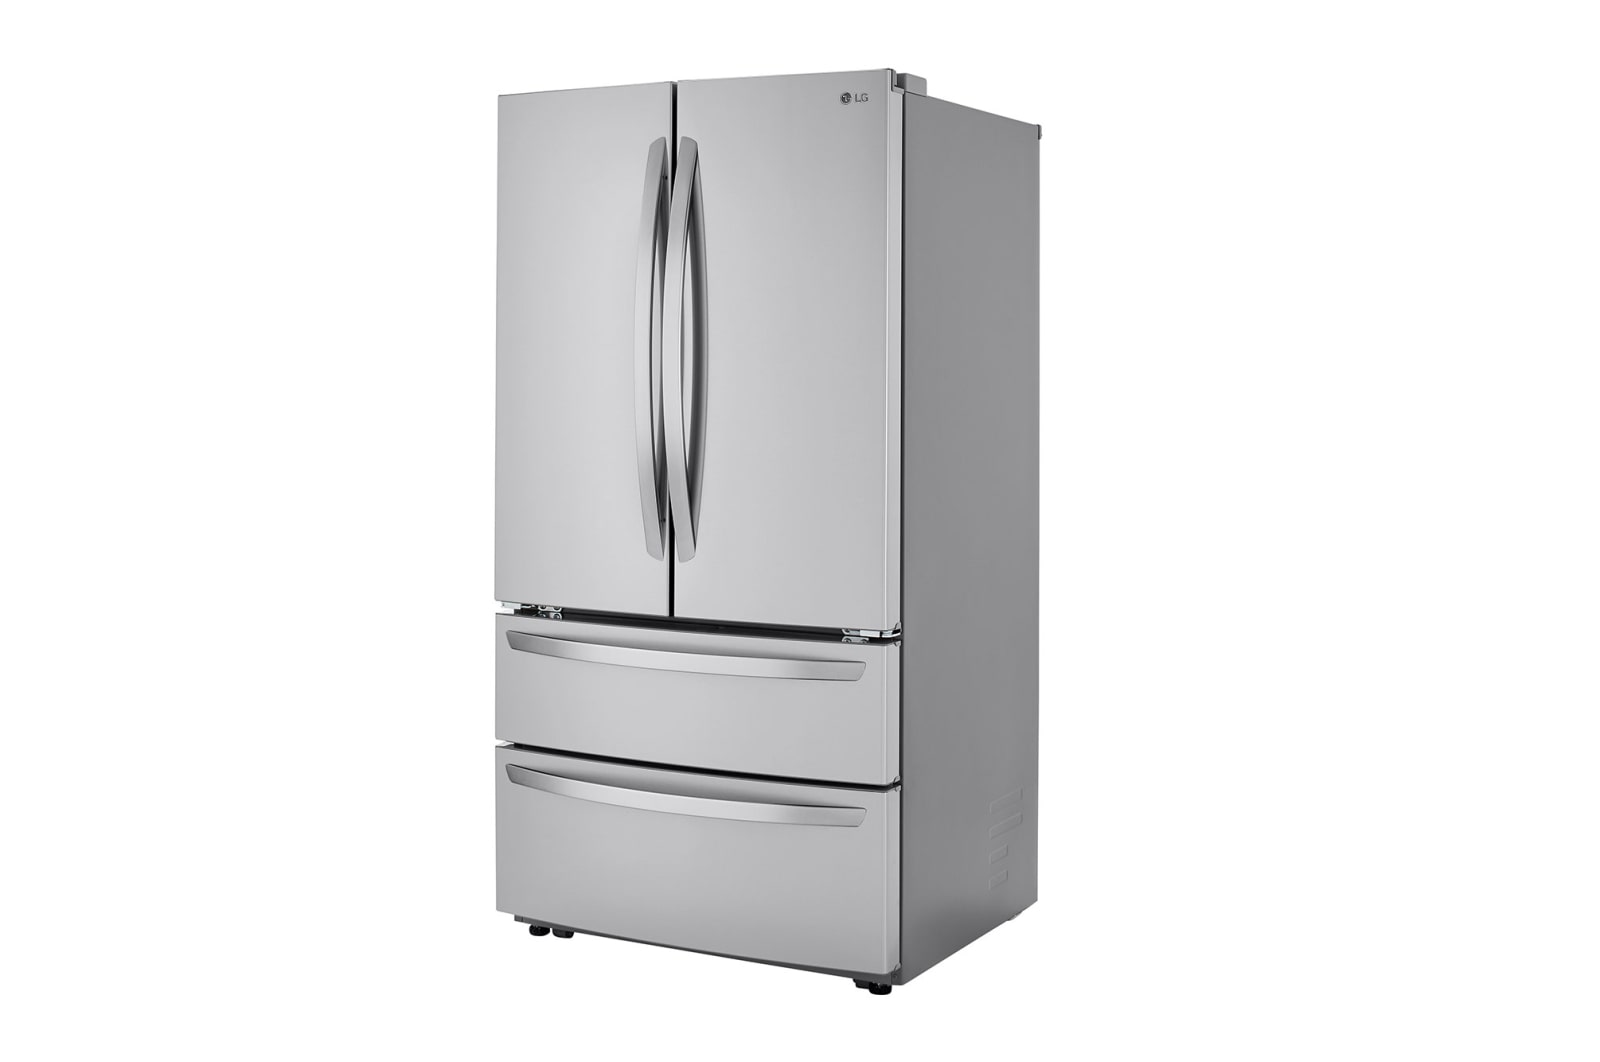 Lg 27 cu. ft. French Door Refrigerator